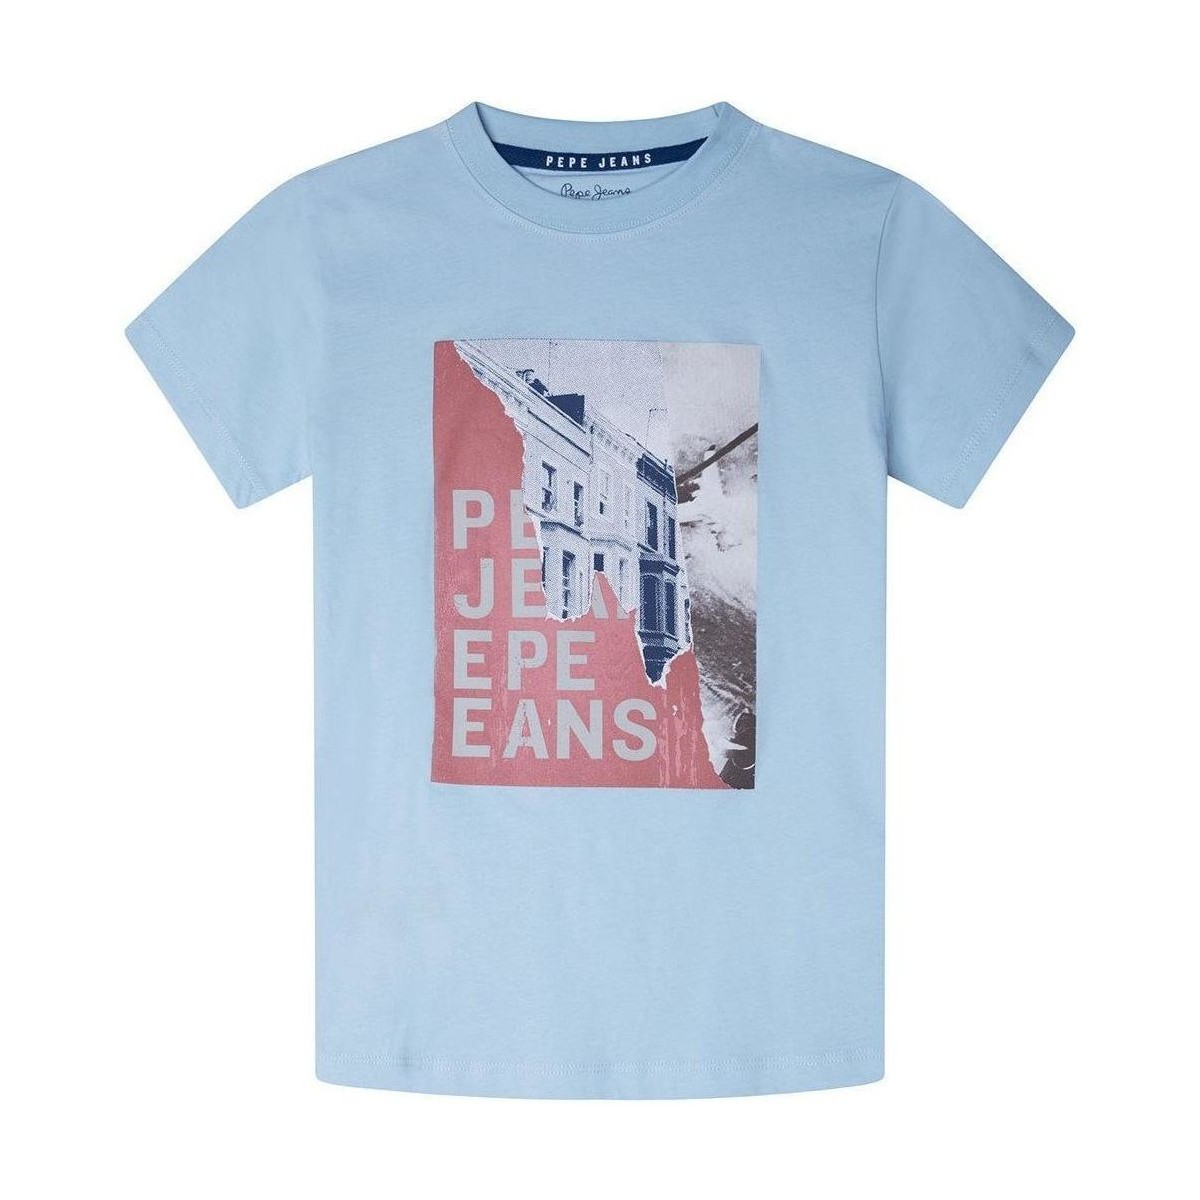 textil Pojkar T-shirts Pepe jeans  Blå